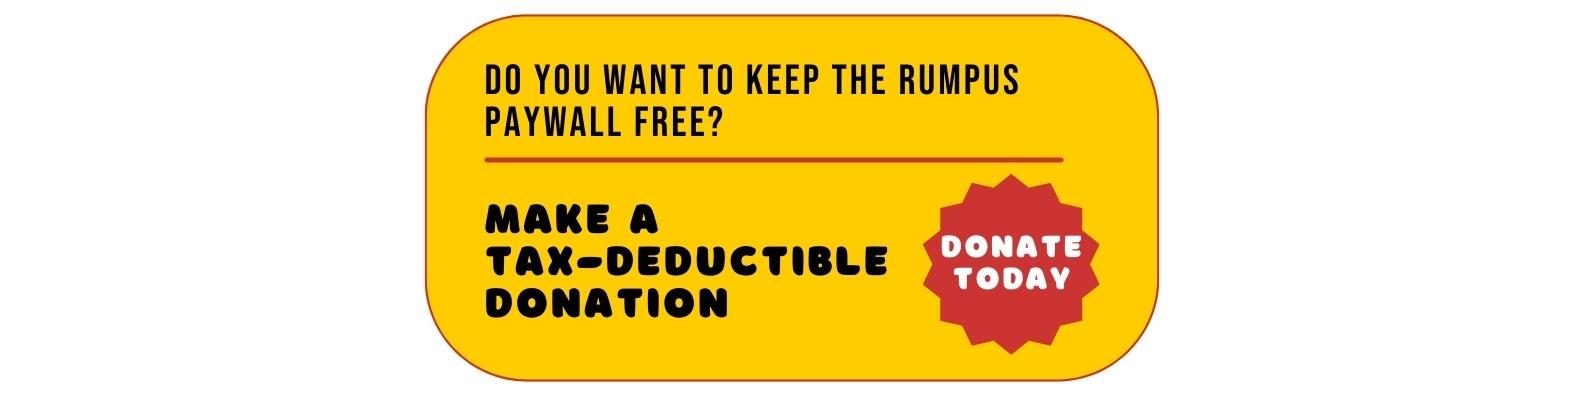 Make a tax-deductible donation to The Rumpus